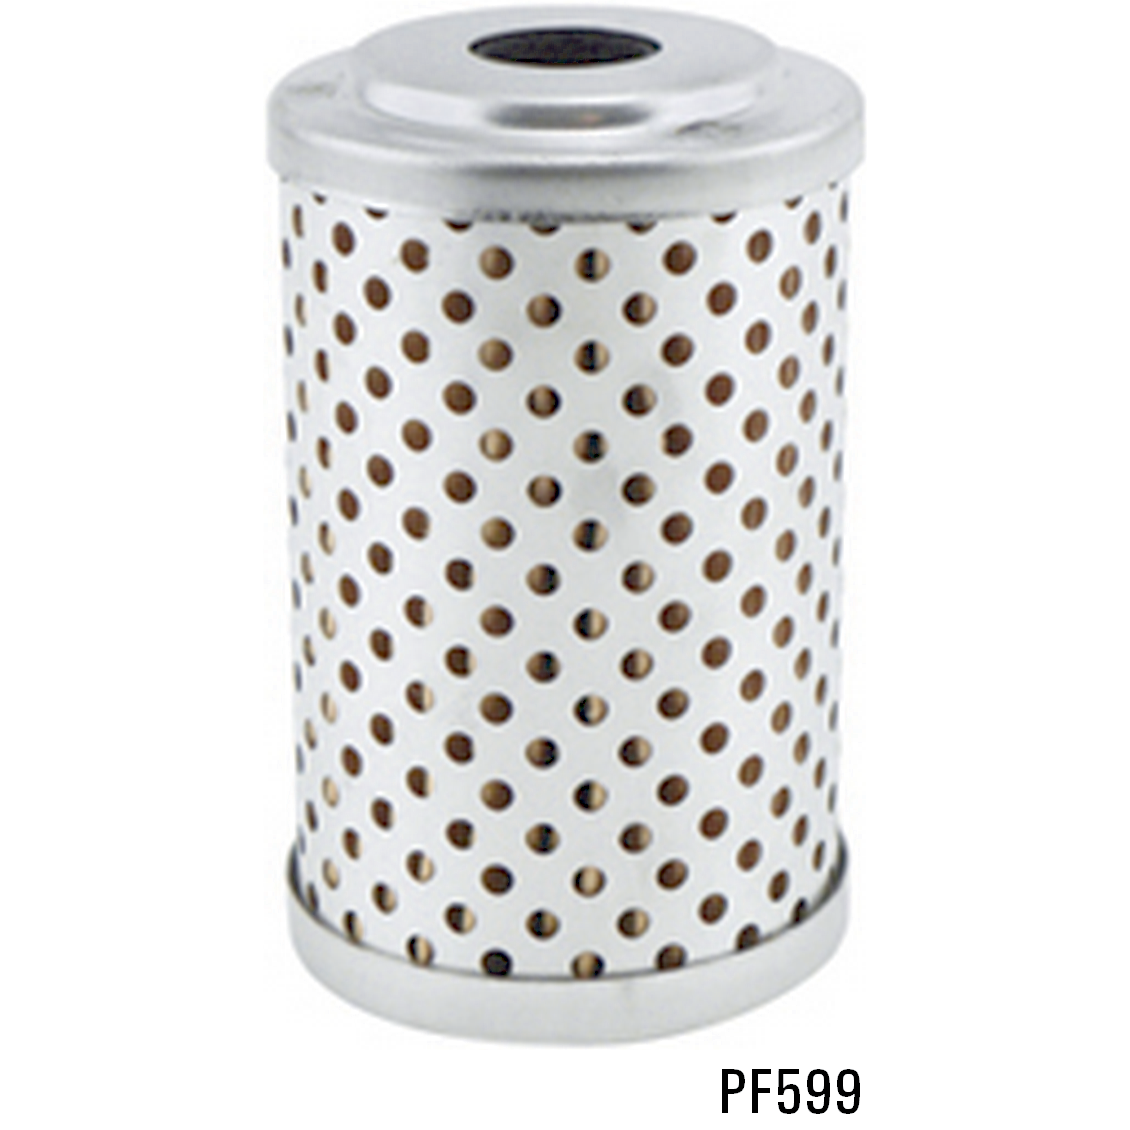 PF599 - Fuel/Water Separator